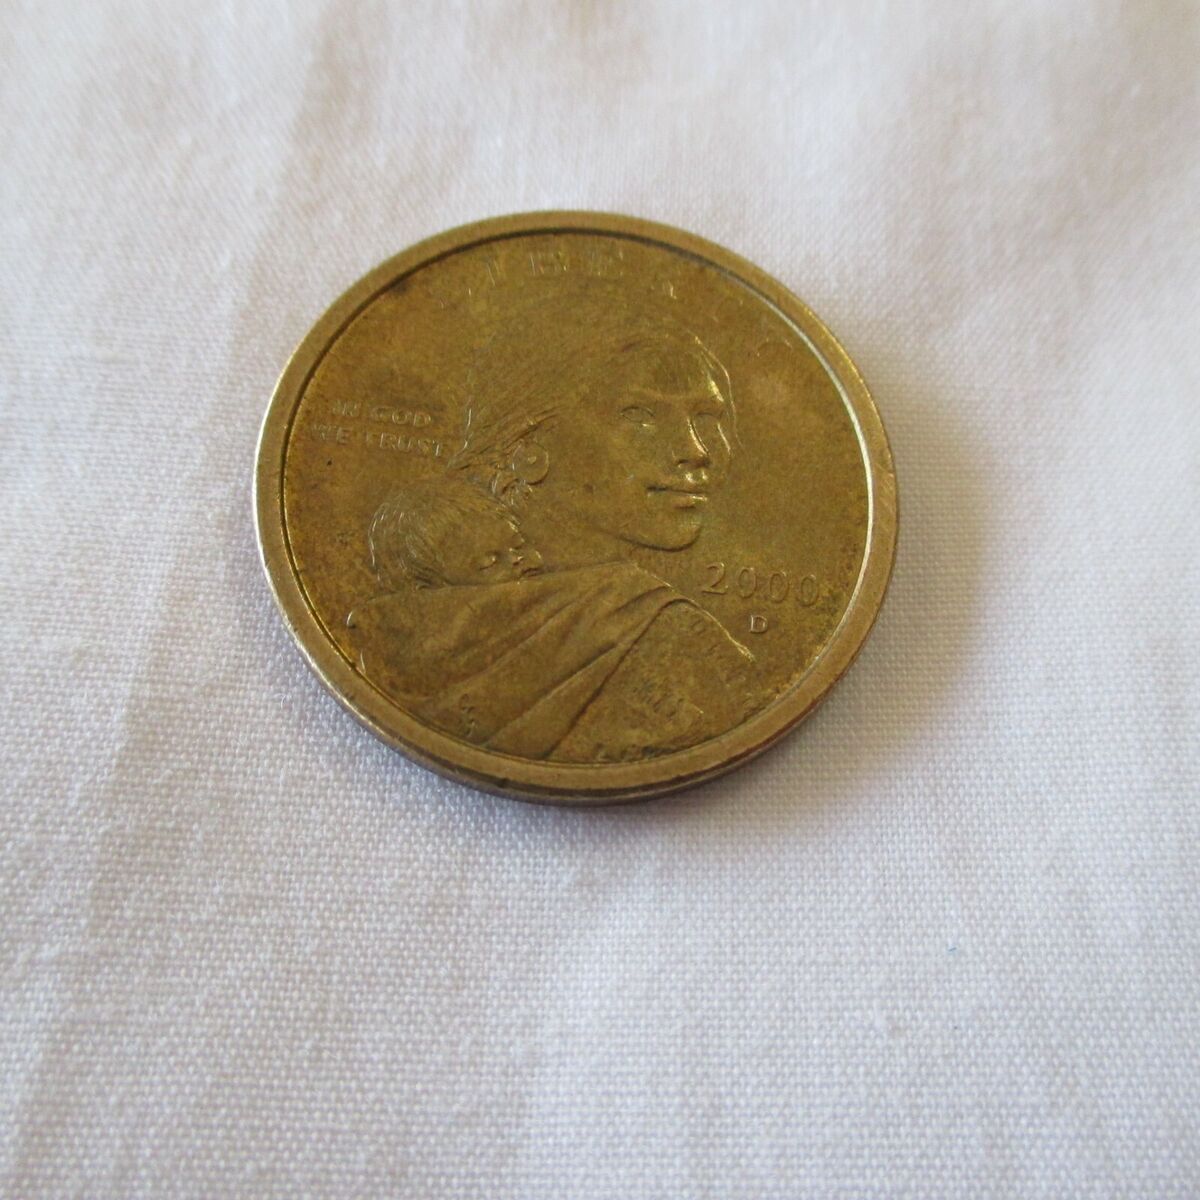 Sacagawea Golden Dollar Coin | U.S. Mint